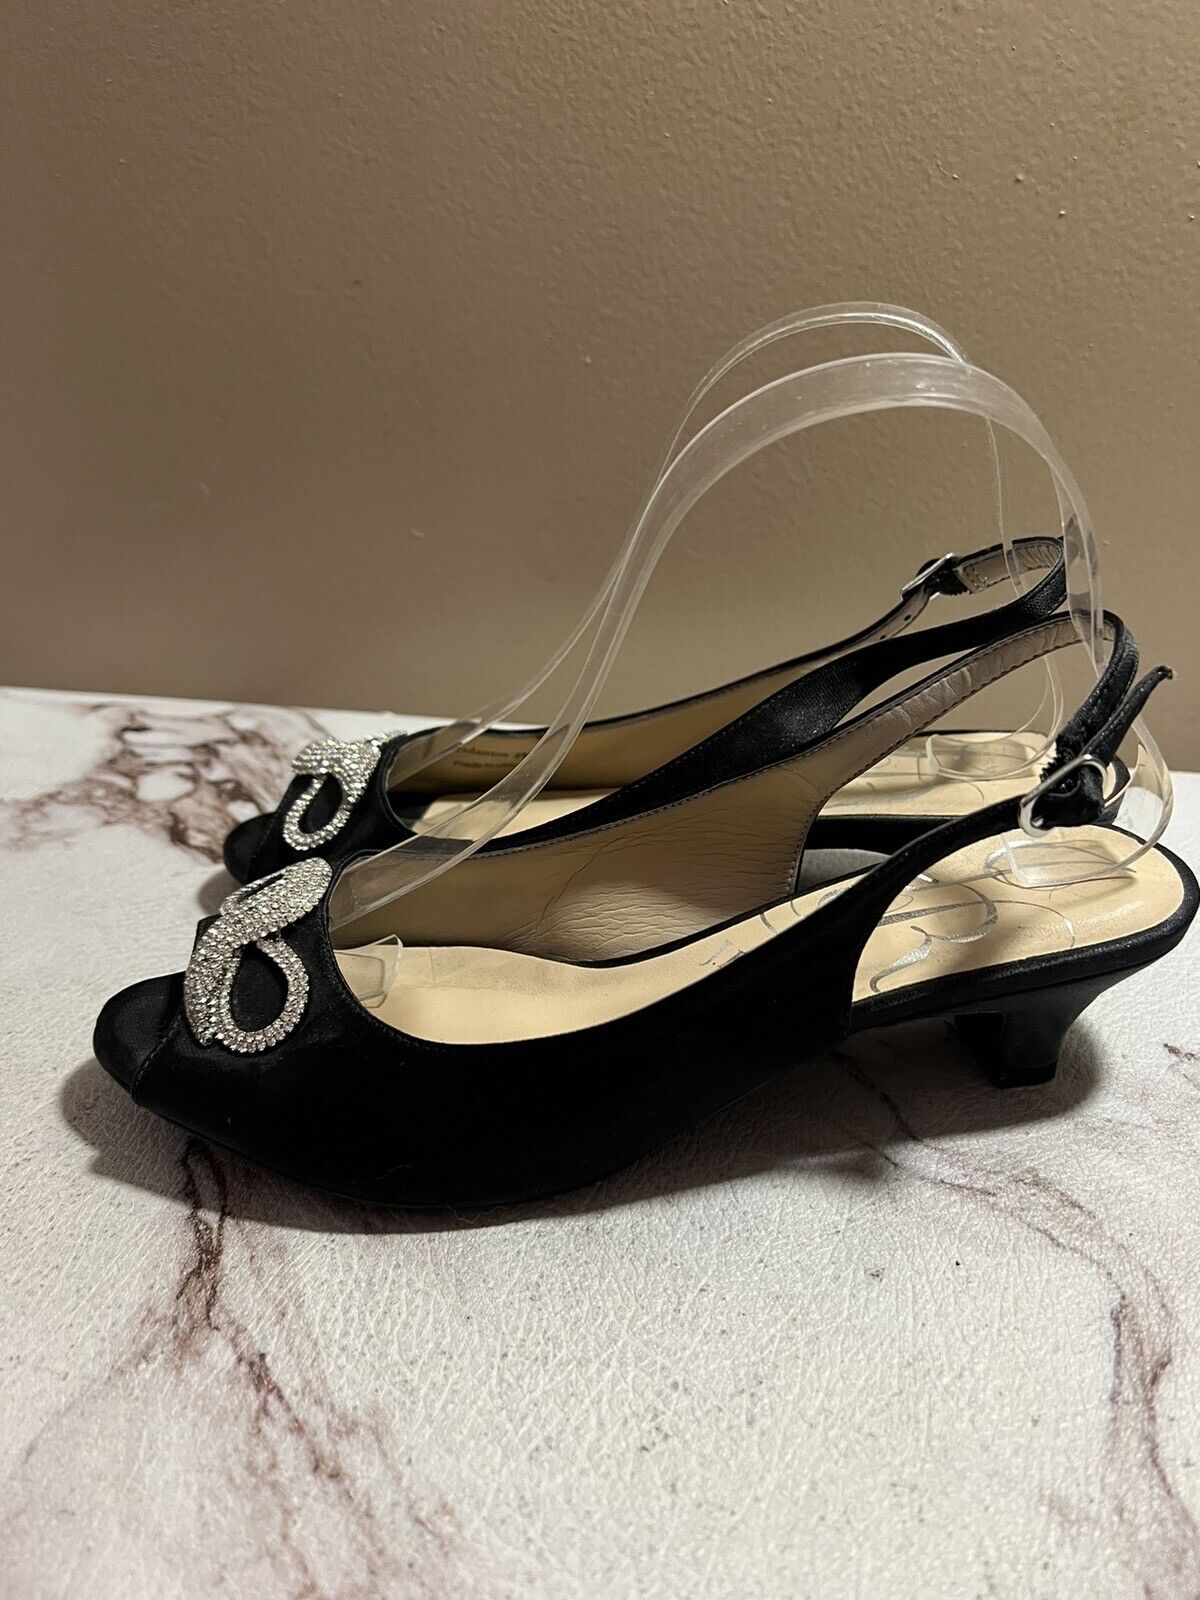 J. Renee Women’s Jadantoo Black Sati Open Toe Embellished Pumps Heels Shoes 8M